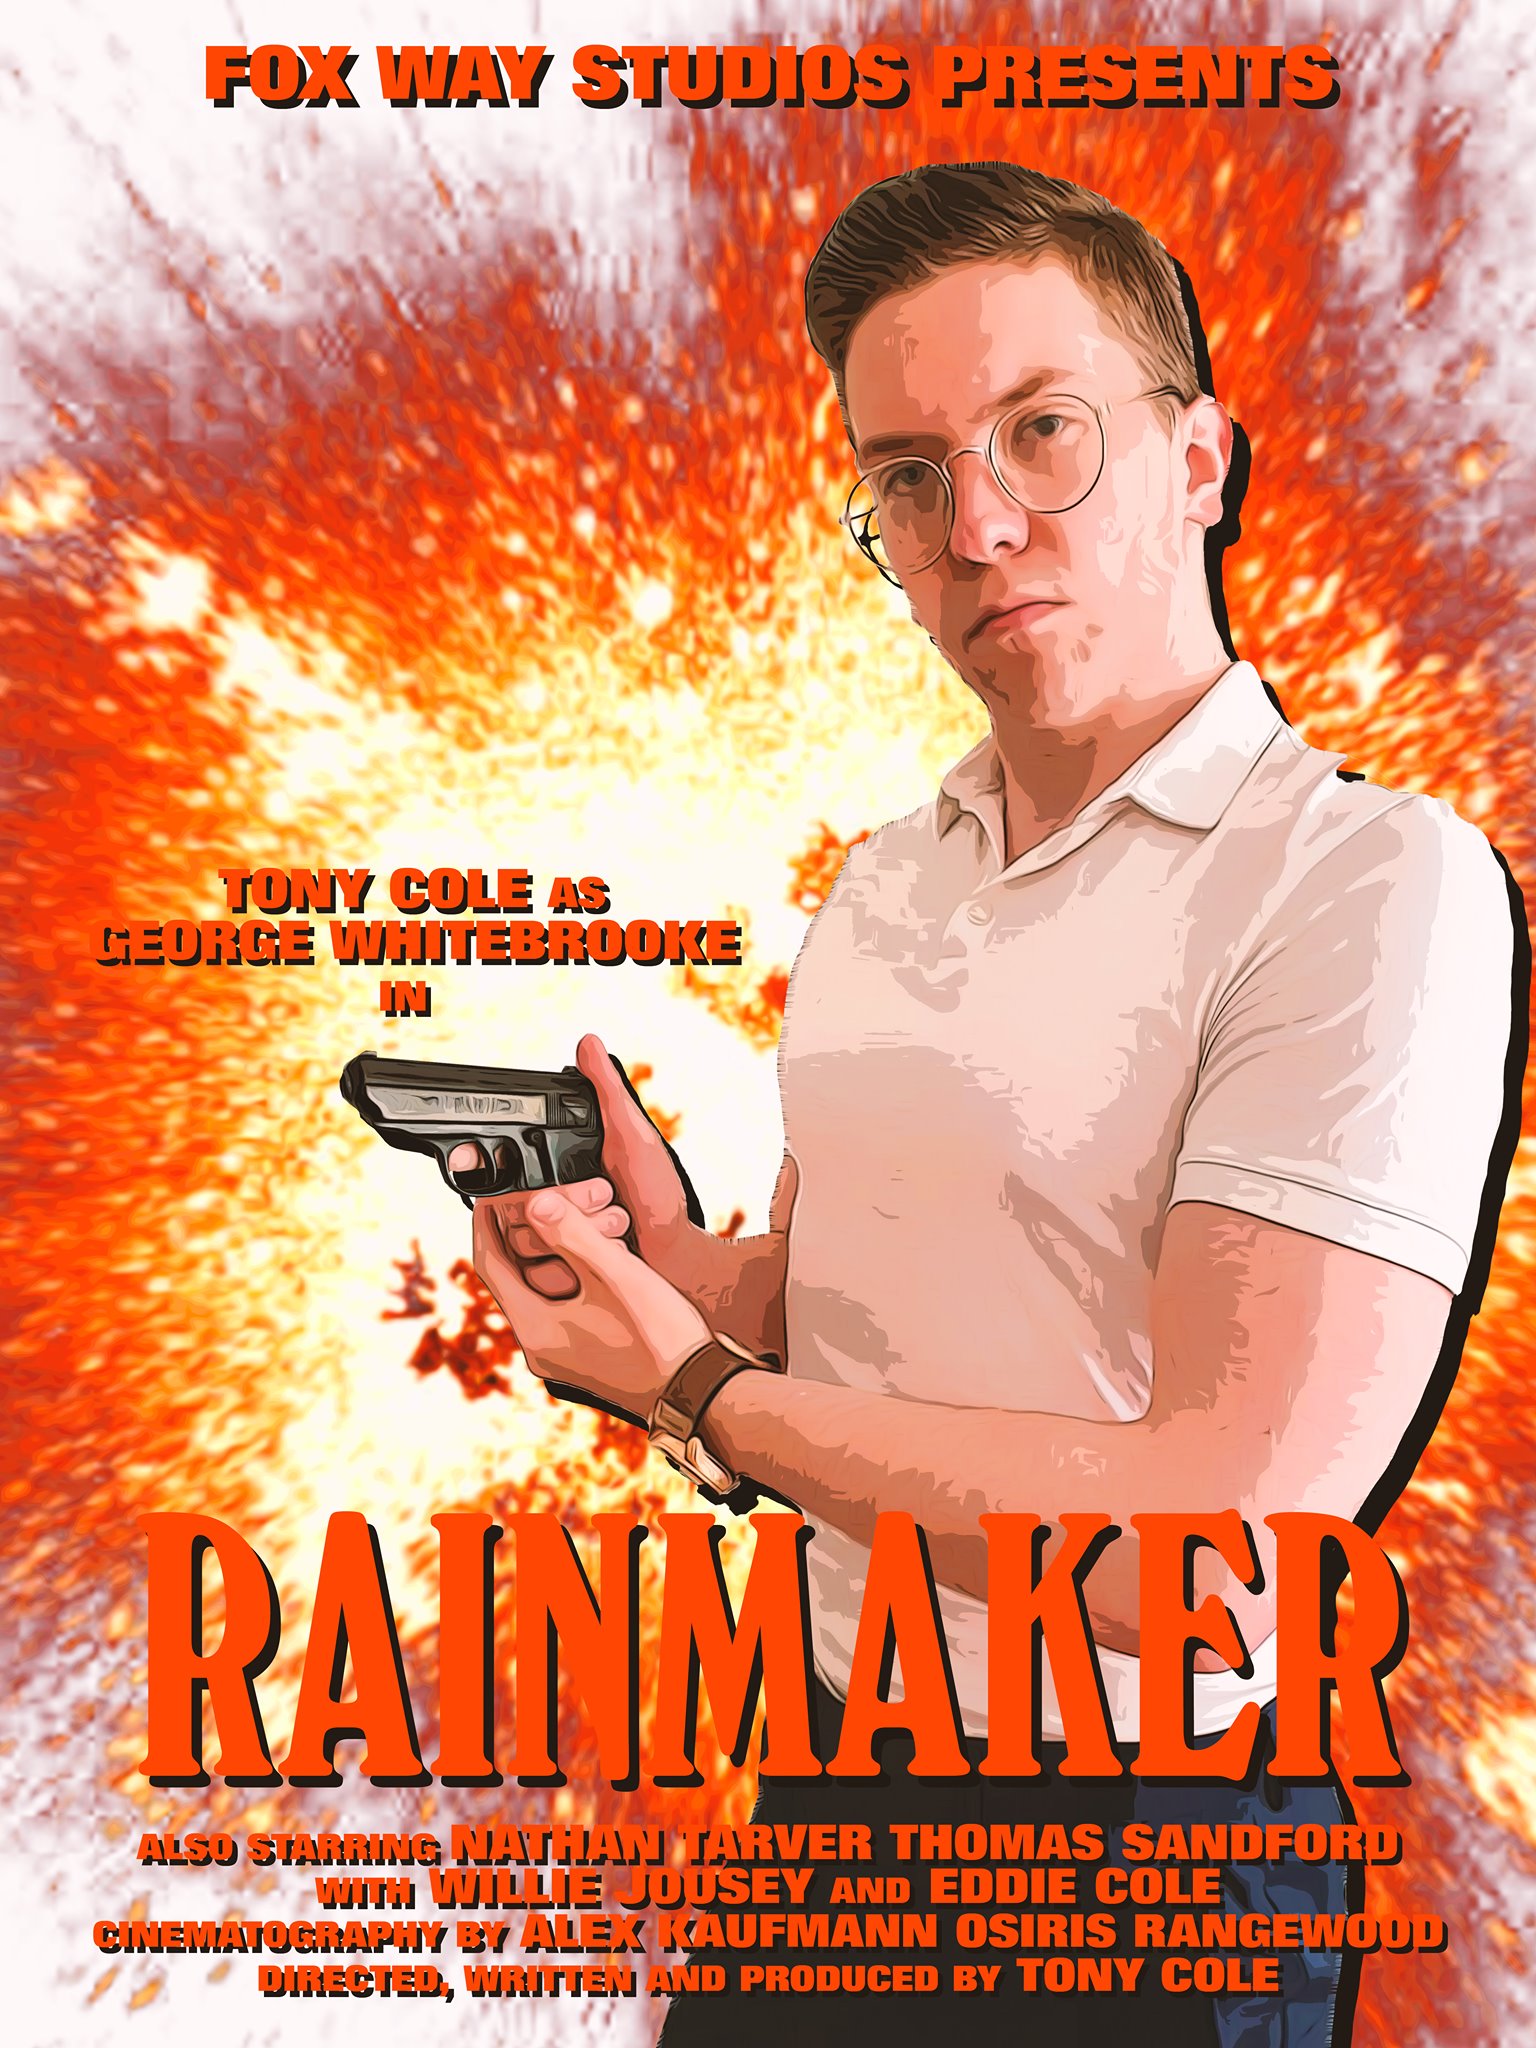 George Whitebrooke: Rainmaker (2020)